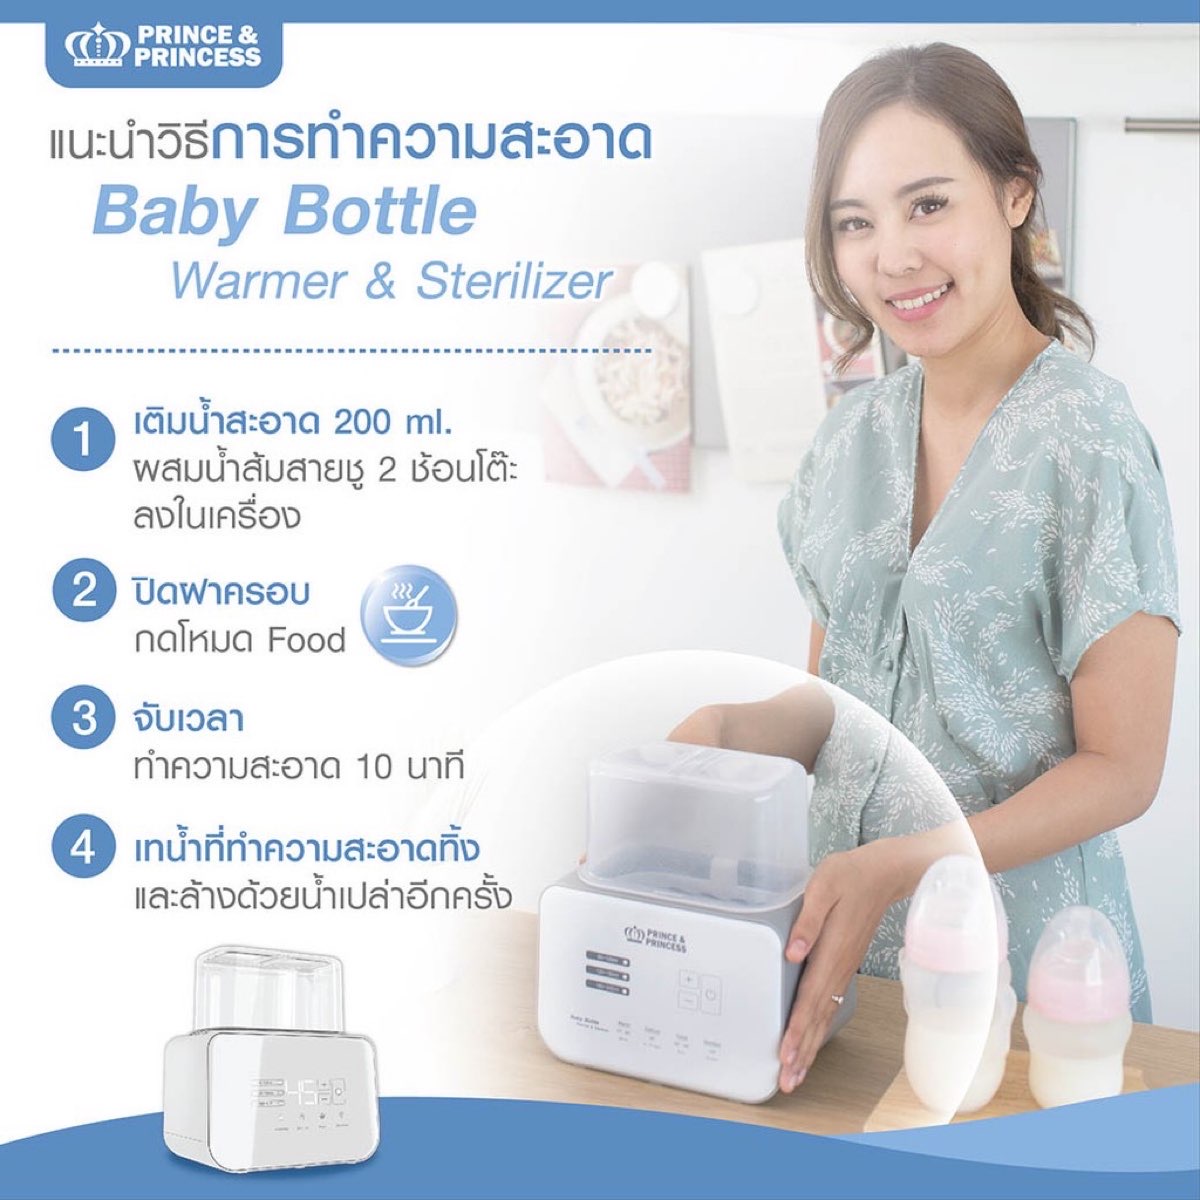 Prince & Princess Baby Bottle Warmer & Sterilizer เครื่องอุ่นนมและอาหารสำหรับเด็ก